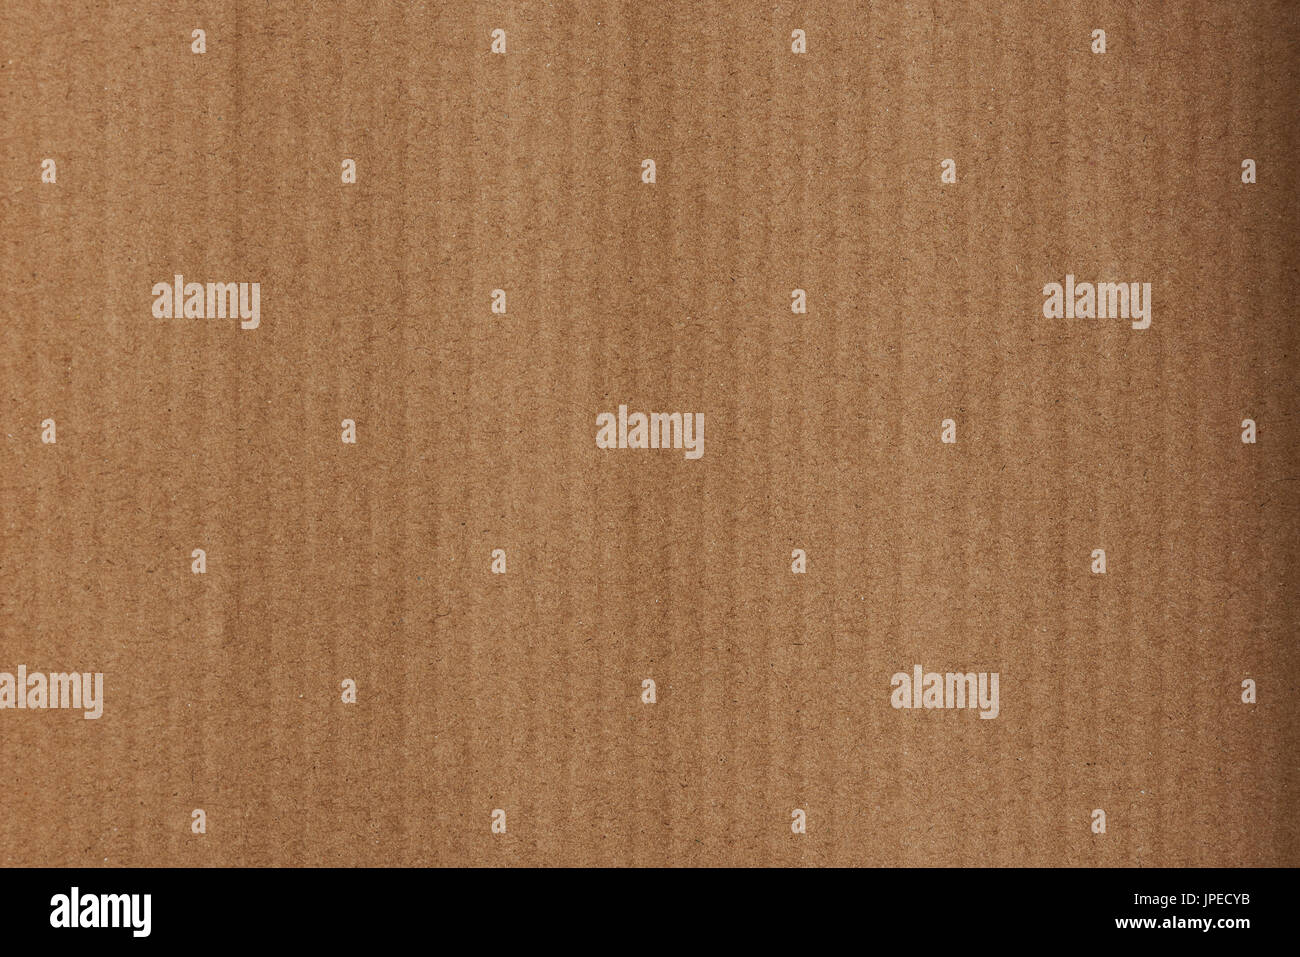 Blank packing brown carton paper surface. Closeup of cardboard paper pattern Stock Photo